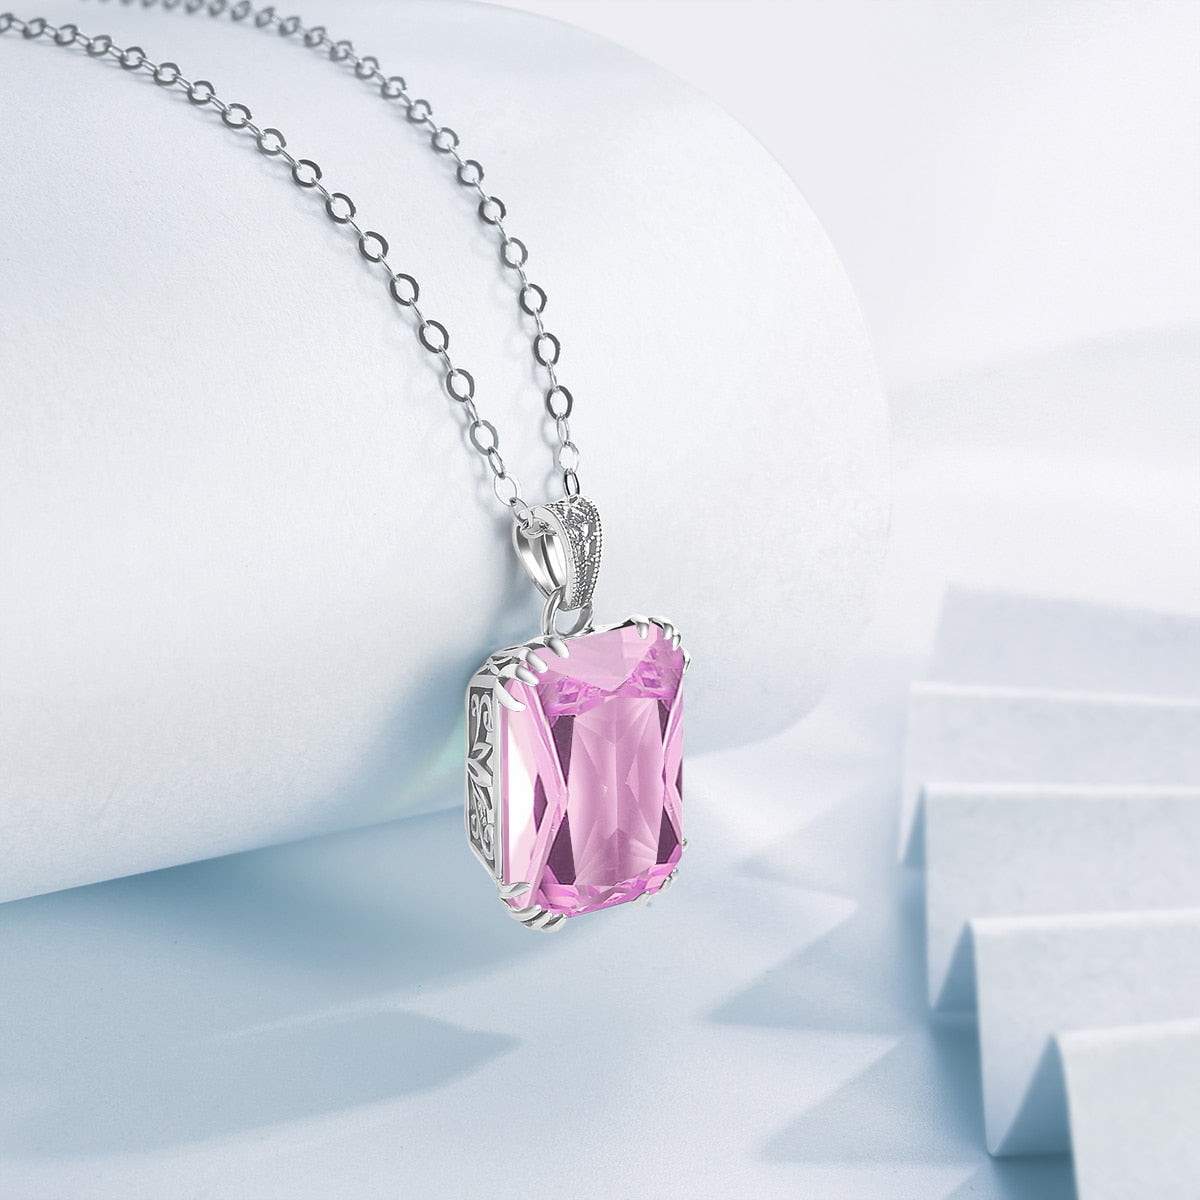 SILVERCHAKRA 925 Sterling Silver Necklace For Women Luxury Aquamarine Gemstones Necklace Pendant Fine Jewelry Filigree Design Pink Crystal 45cm